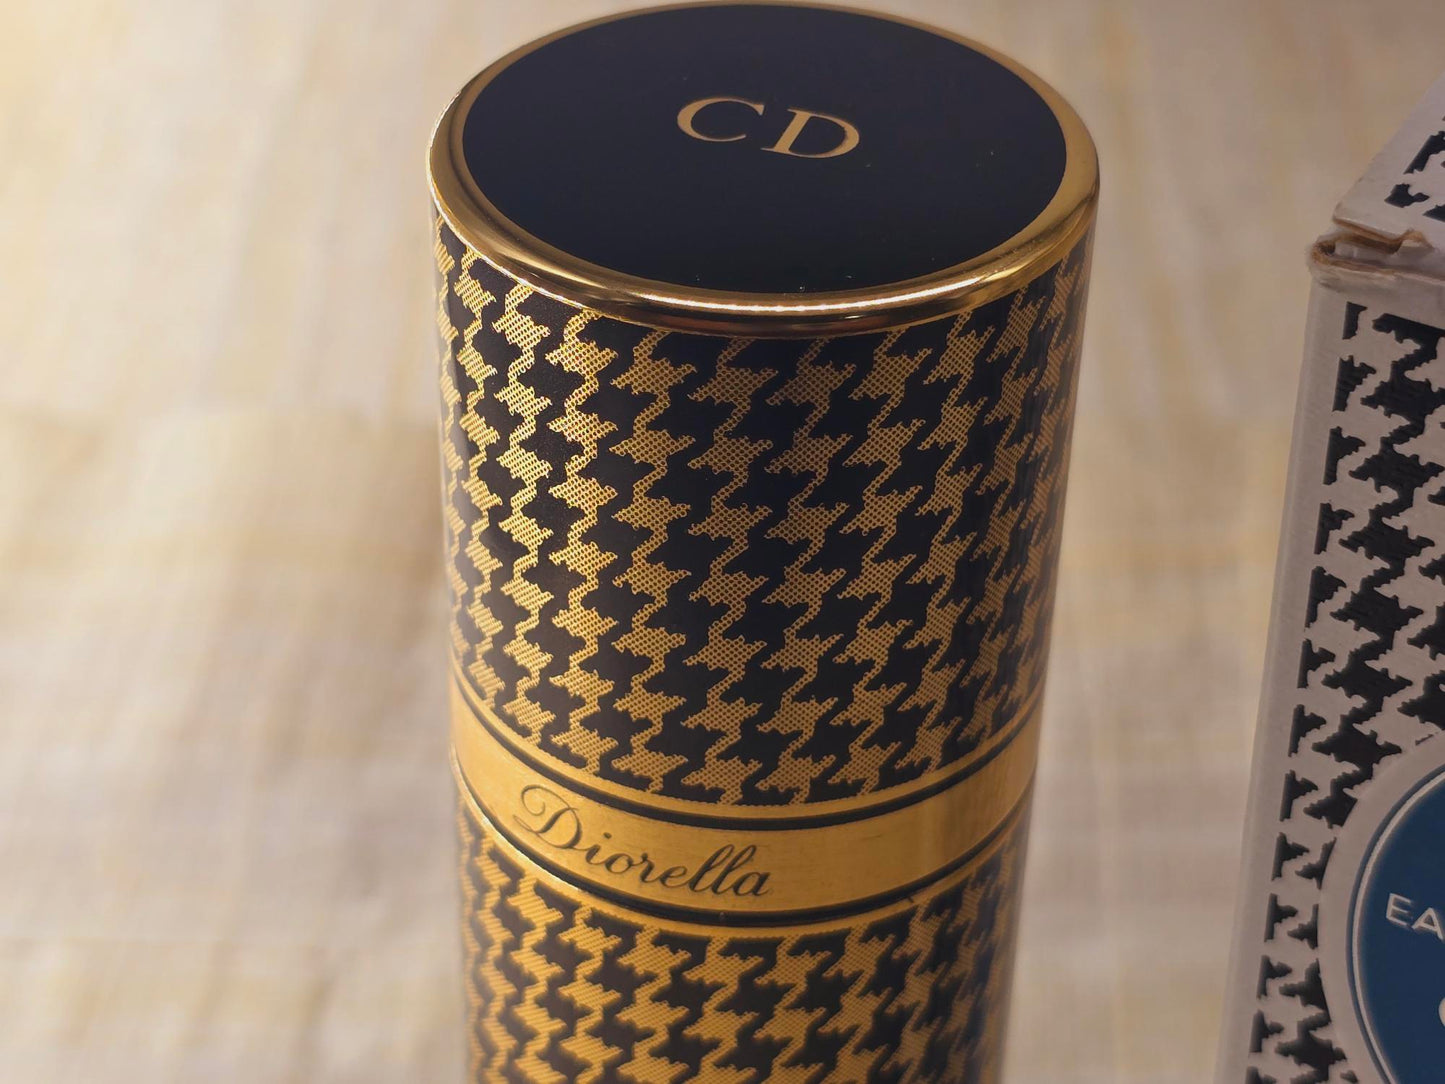 Diorella Christian Dior Paris EDT Refill Spray 100 ml 3.4 oz OR 50 ml 1.7 oz, Vintage, Rare